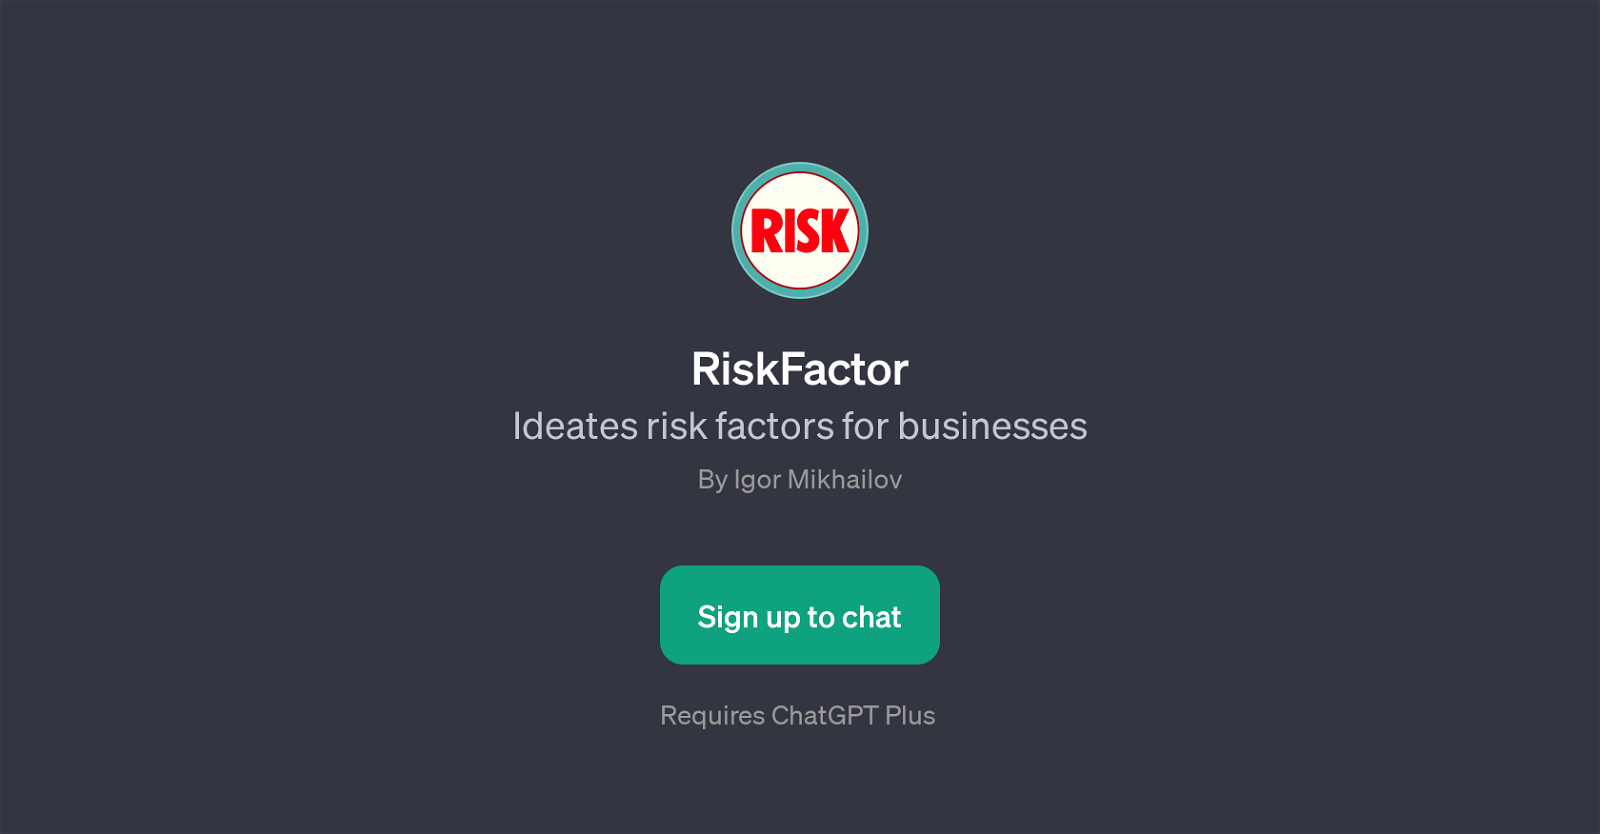 RiskFactor website